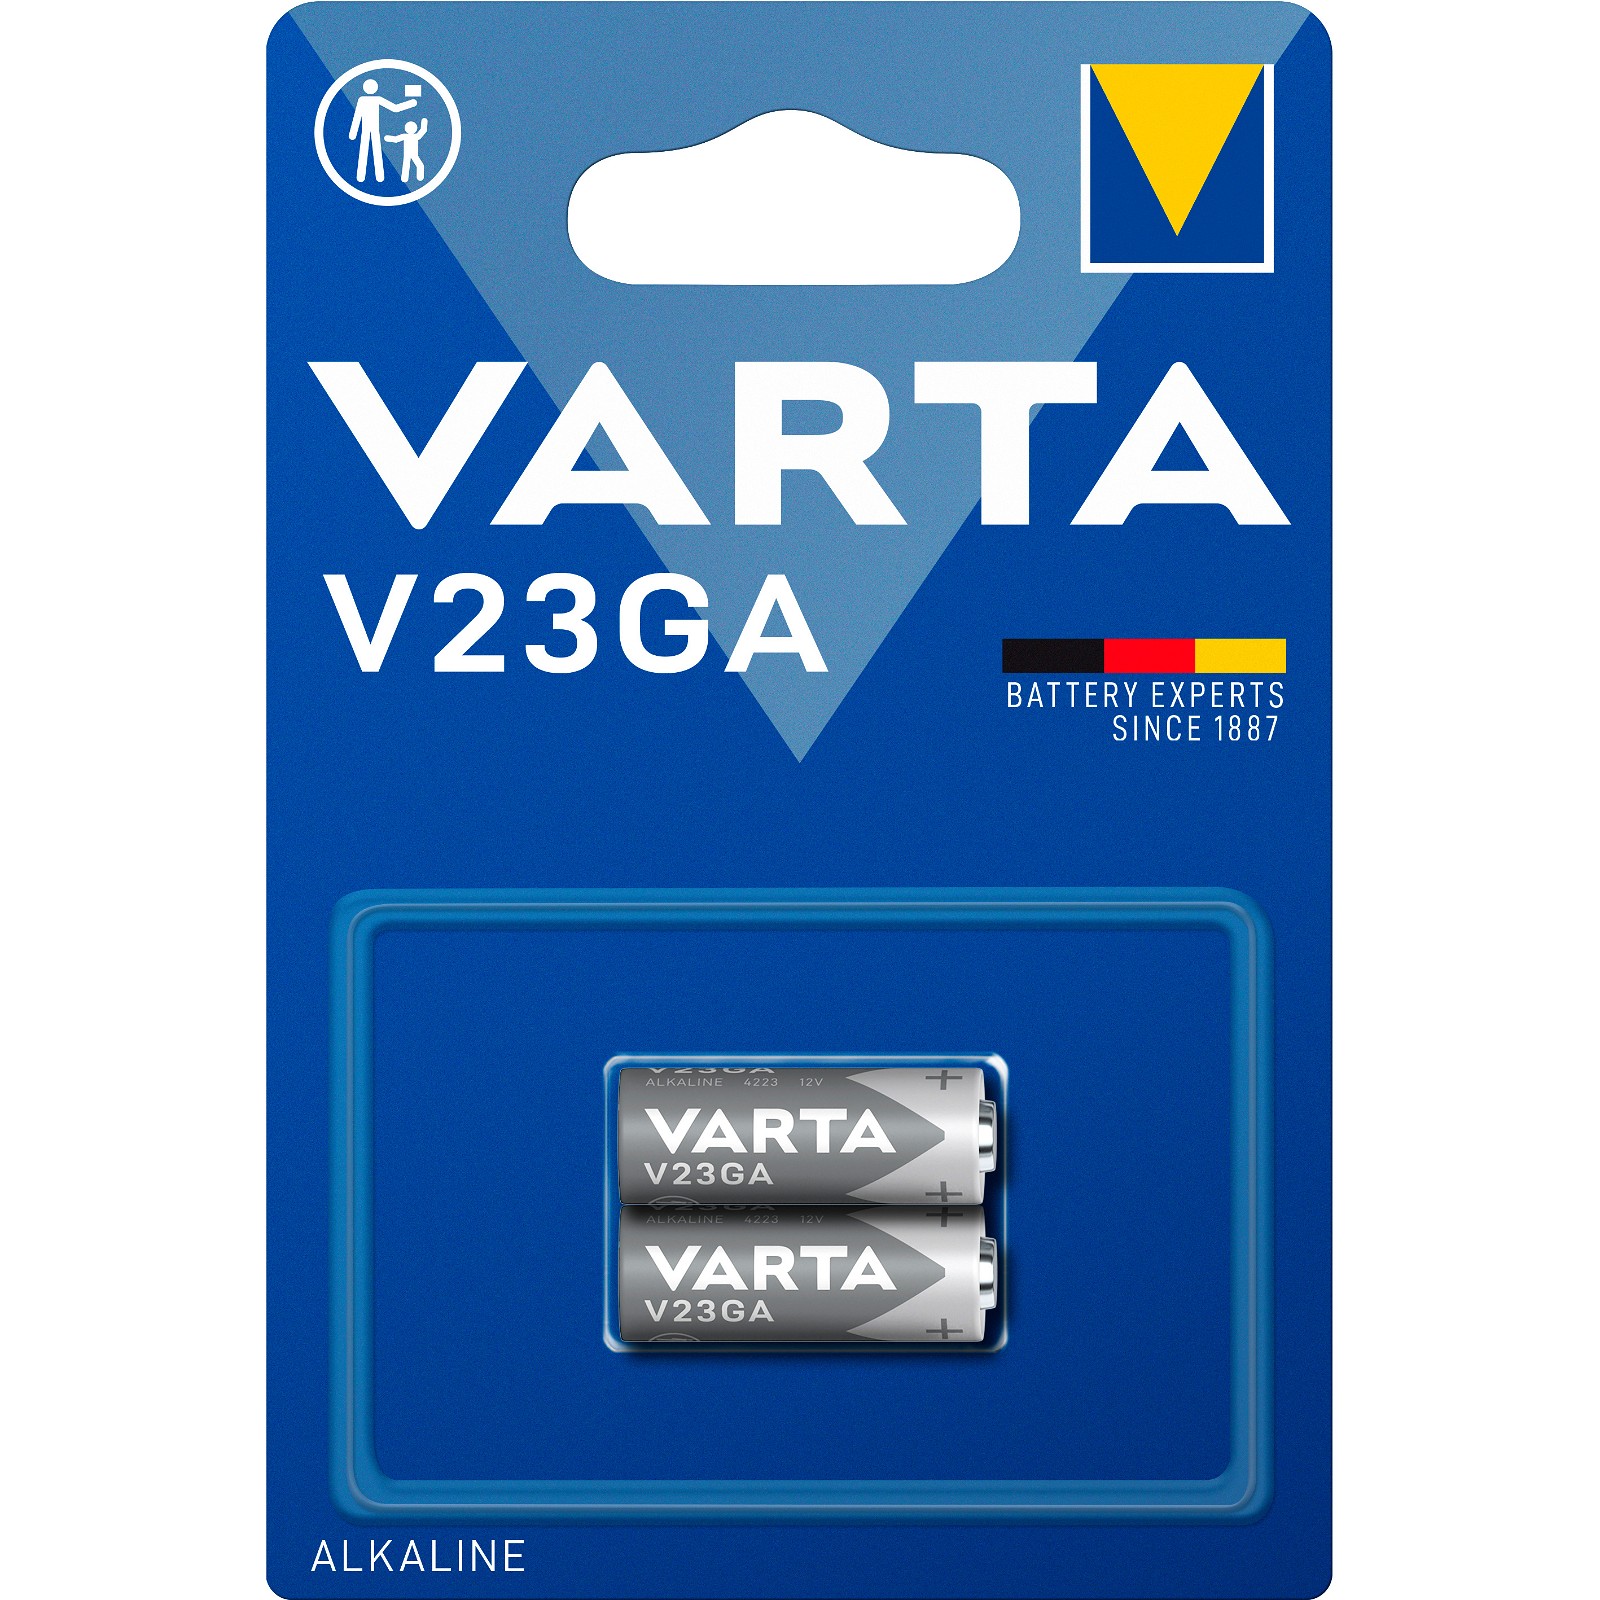 VARTA knapcellebatterier V23GA 2 stk